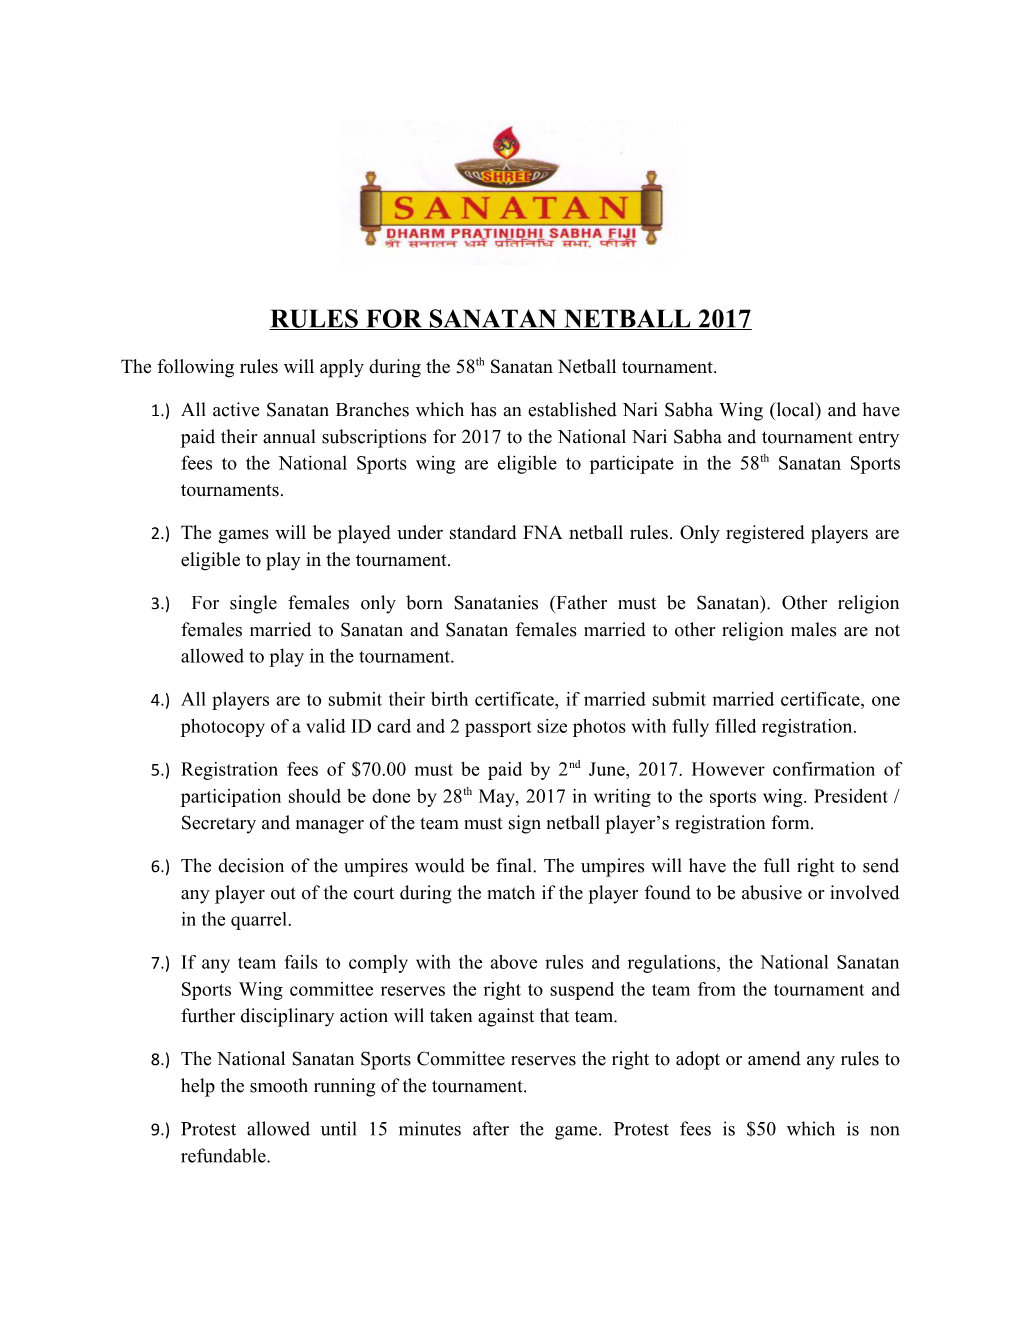 Rules for Sanatan Netball 2017